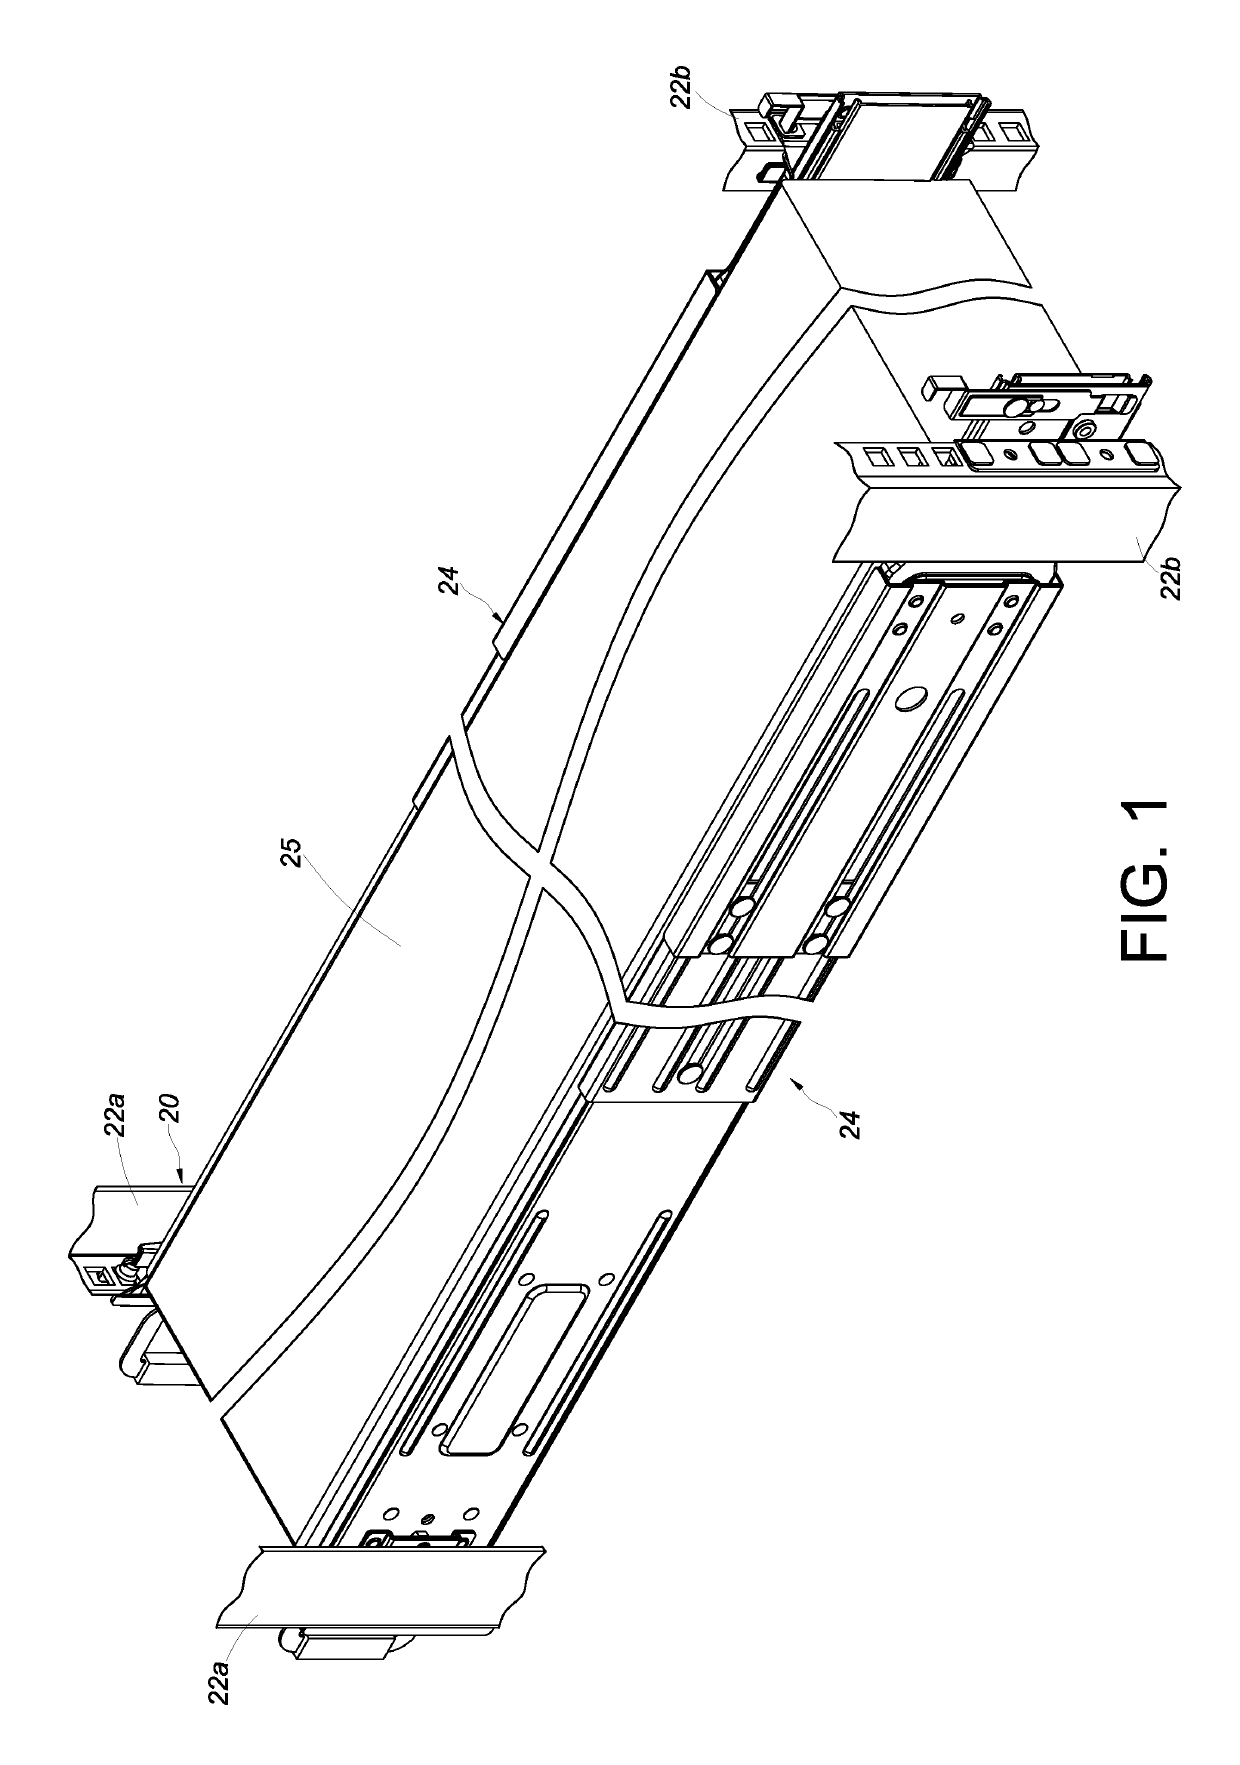 Slide rail assembly and rack system